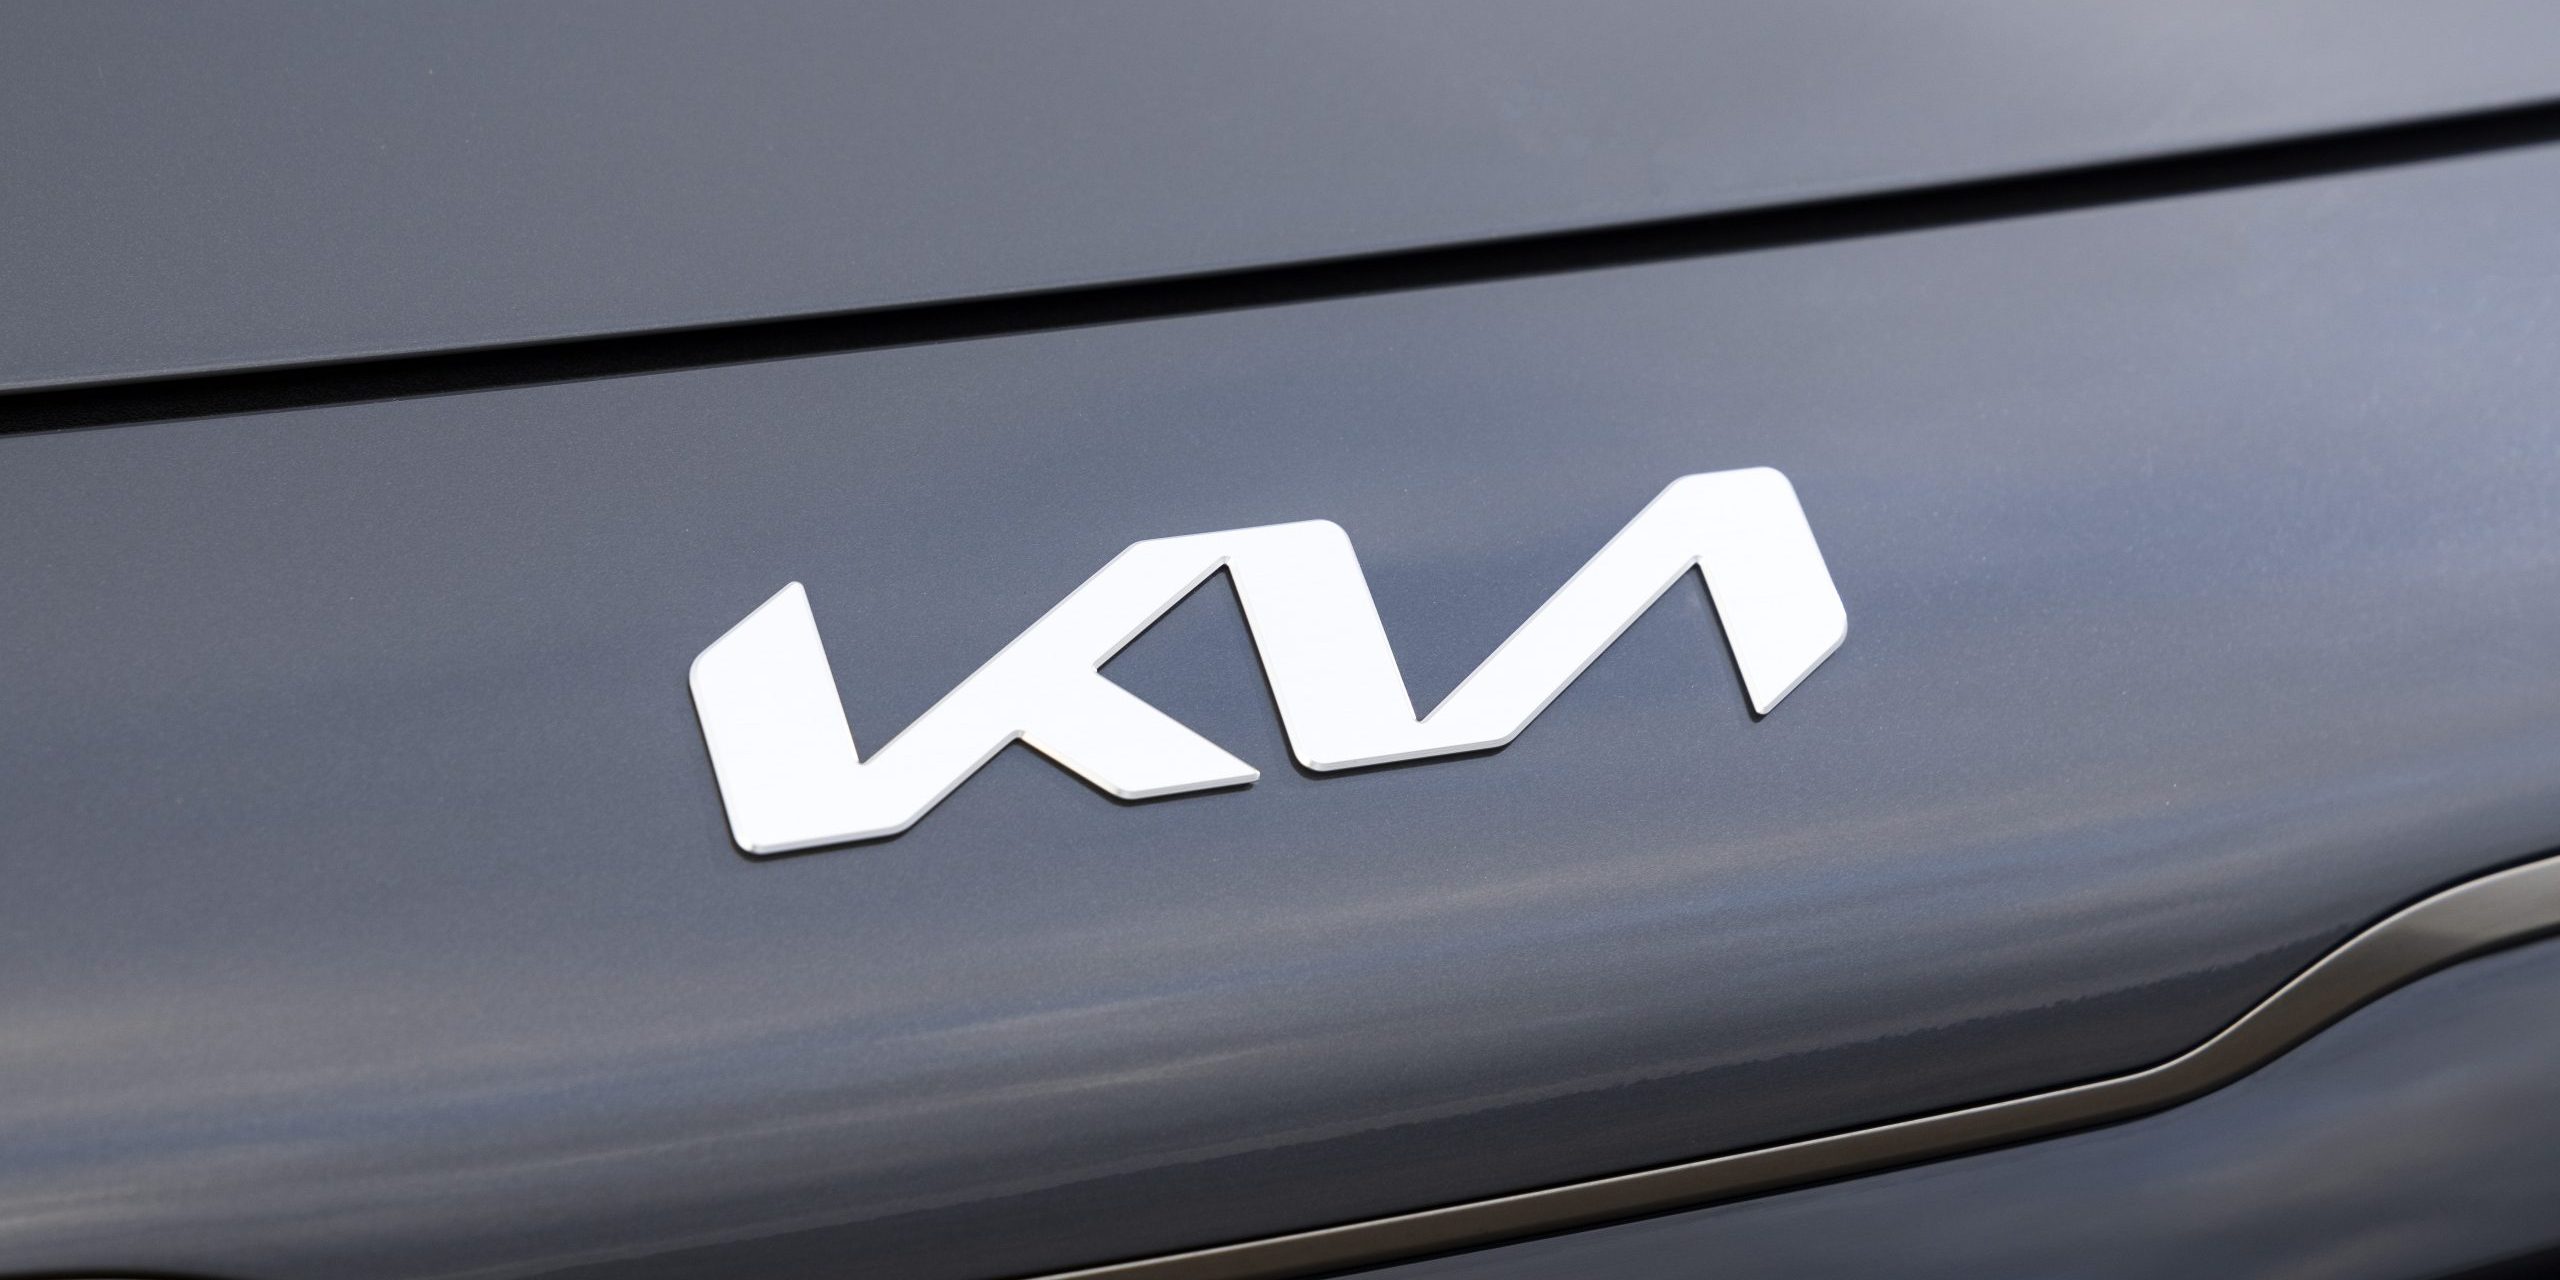 Kia Mexico expects to produce 2 million units by 2024